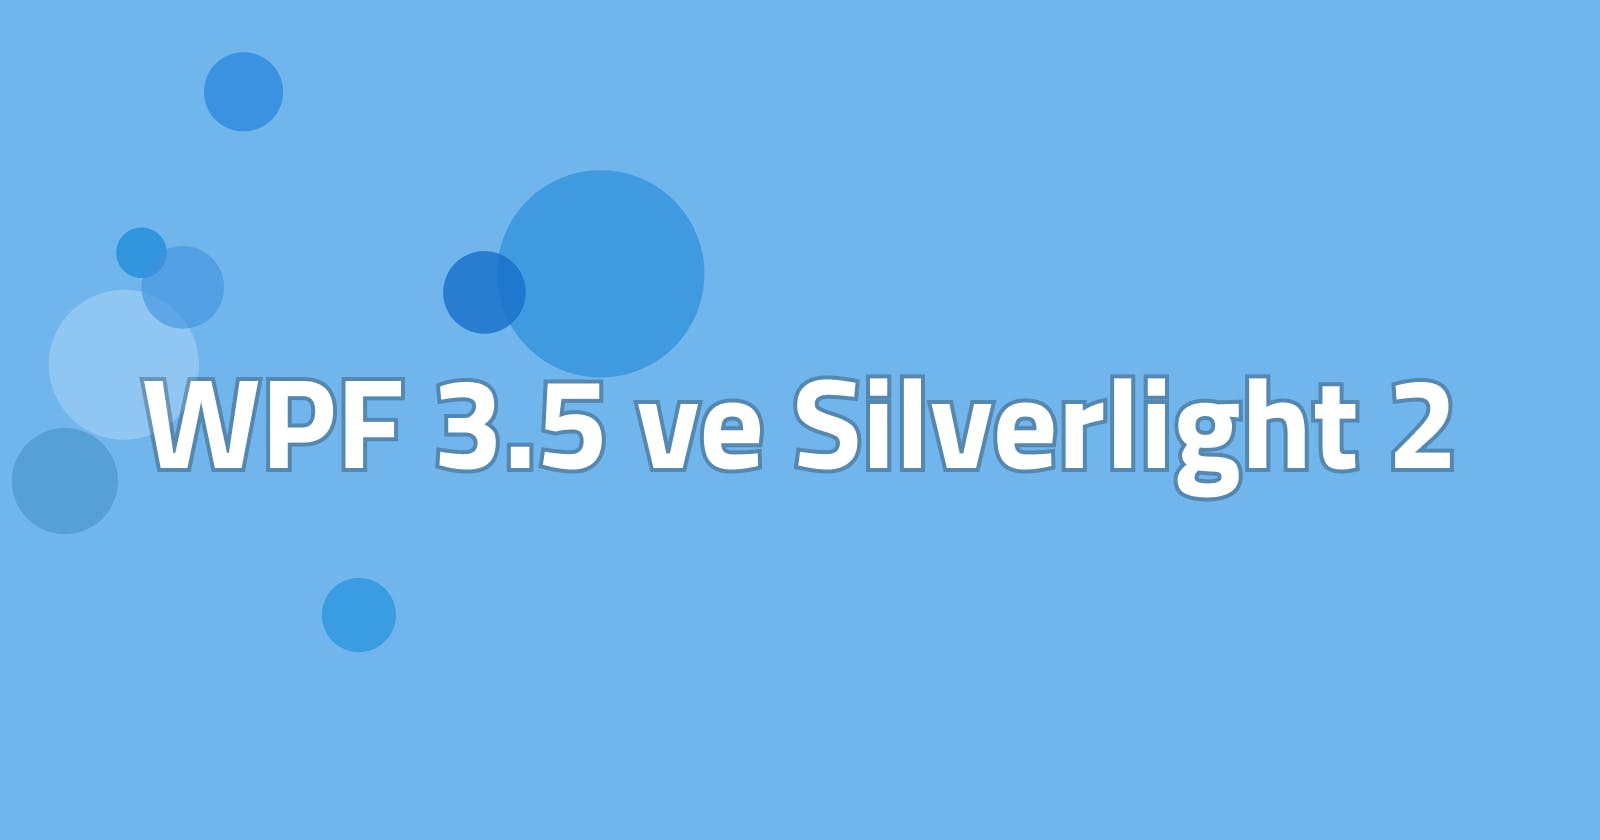 WPF 3.5 ve Silverlight 2